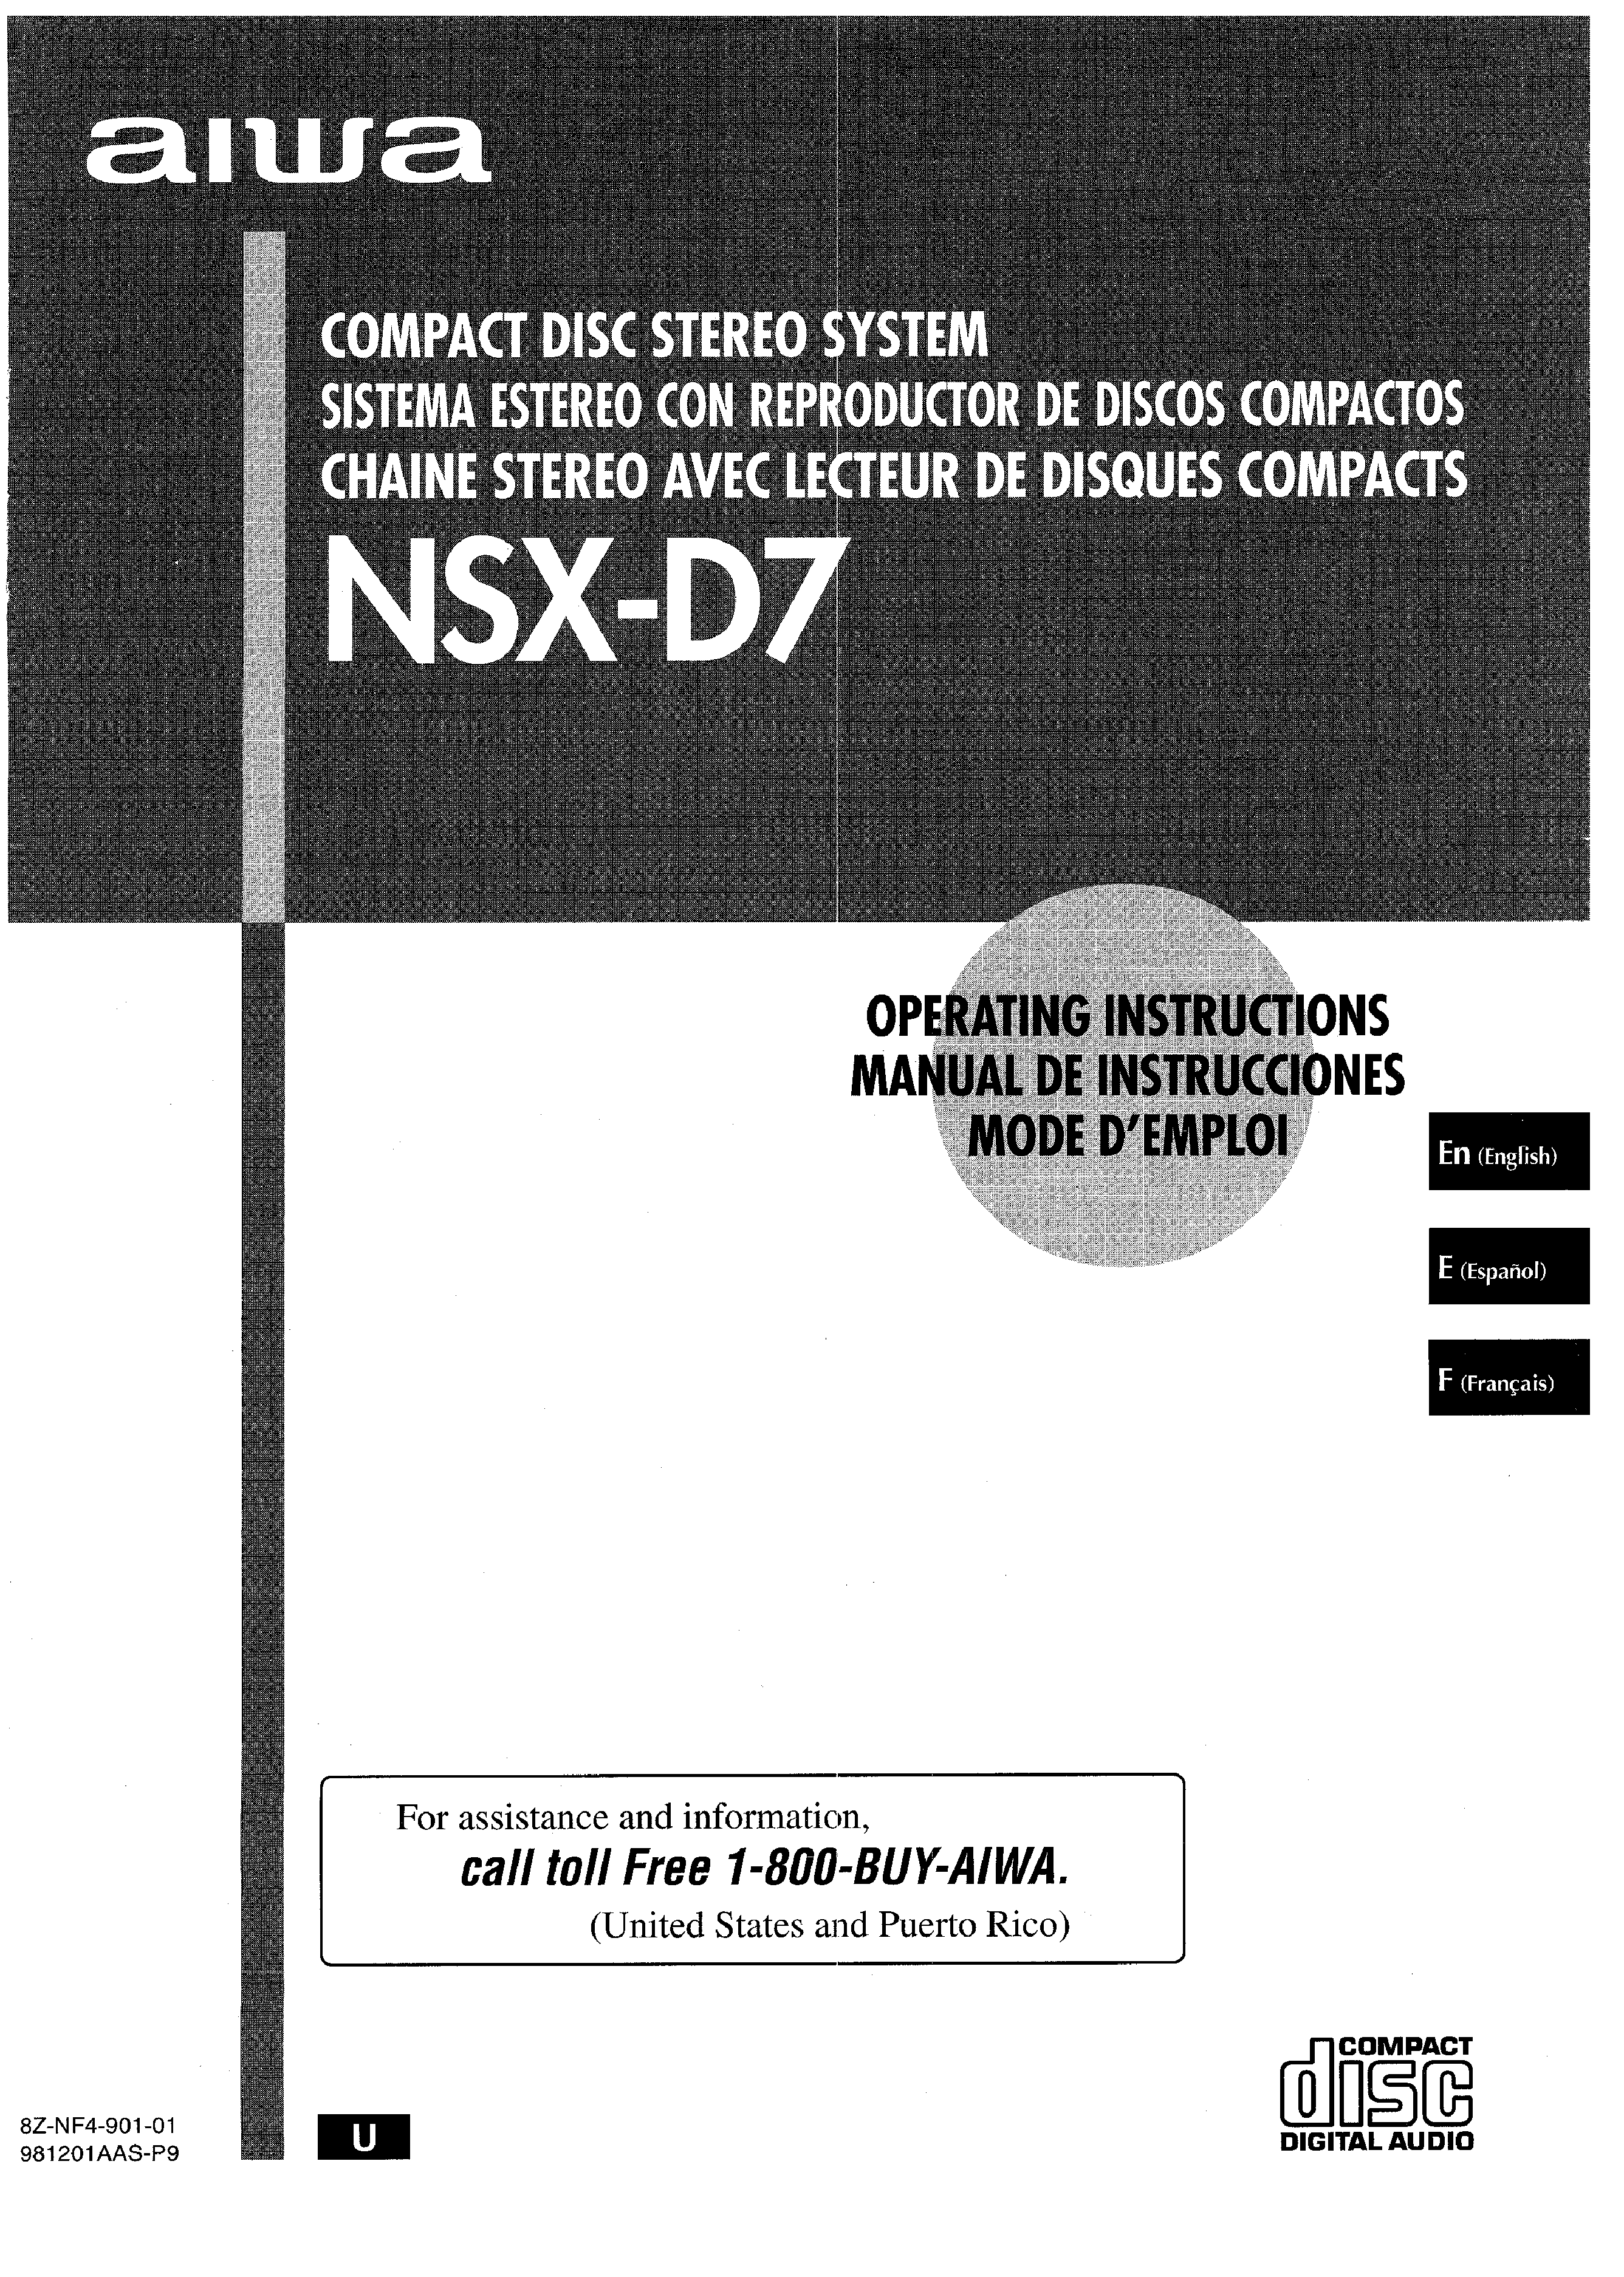 Download Software Aiwa Cx-nd7u Instruction Manual